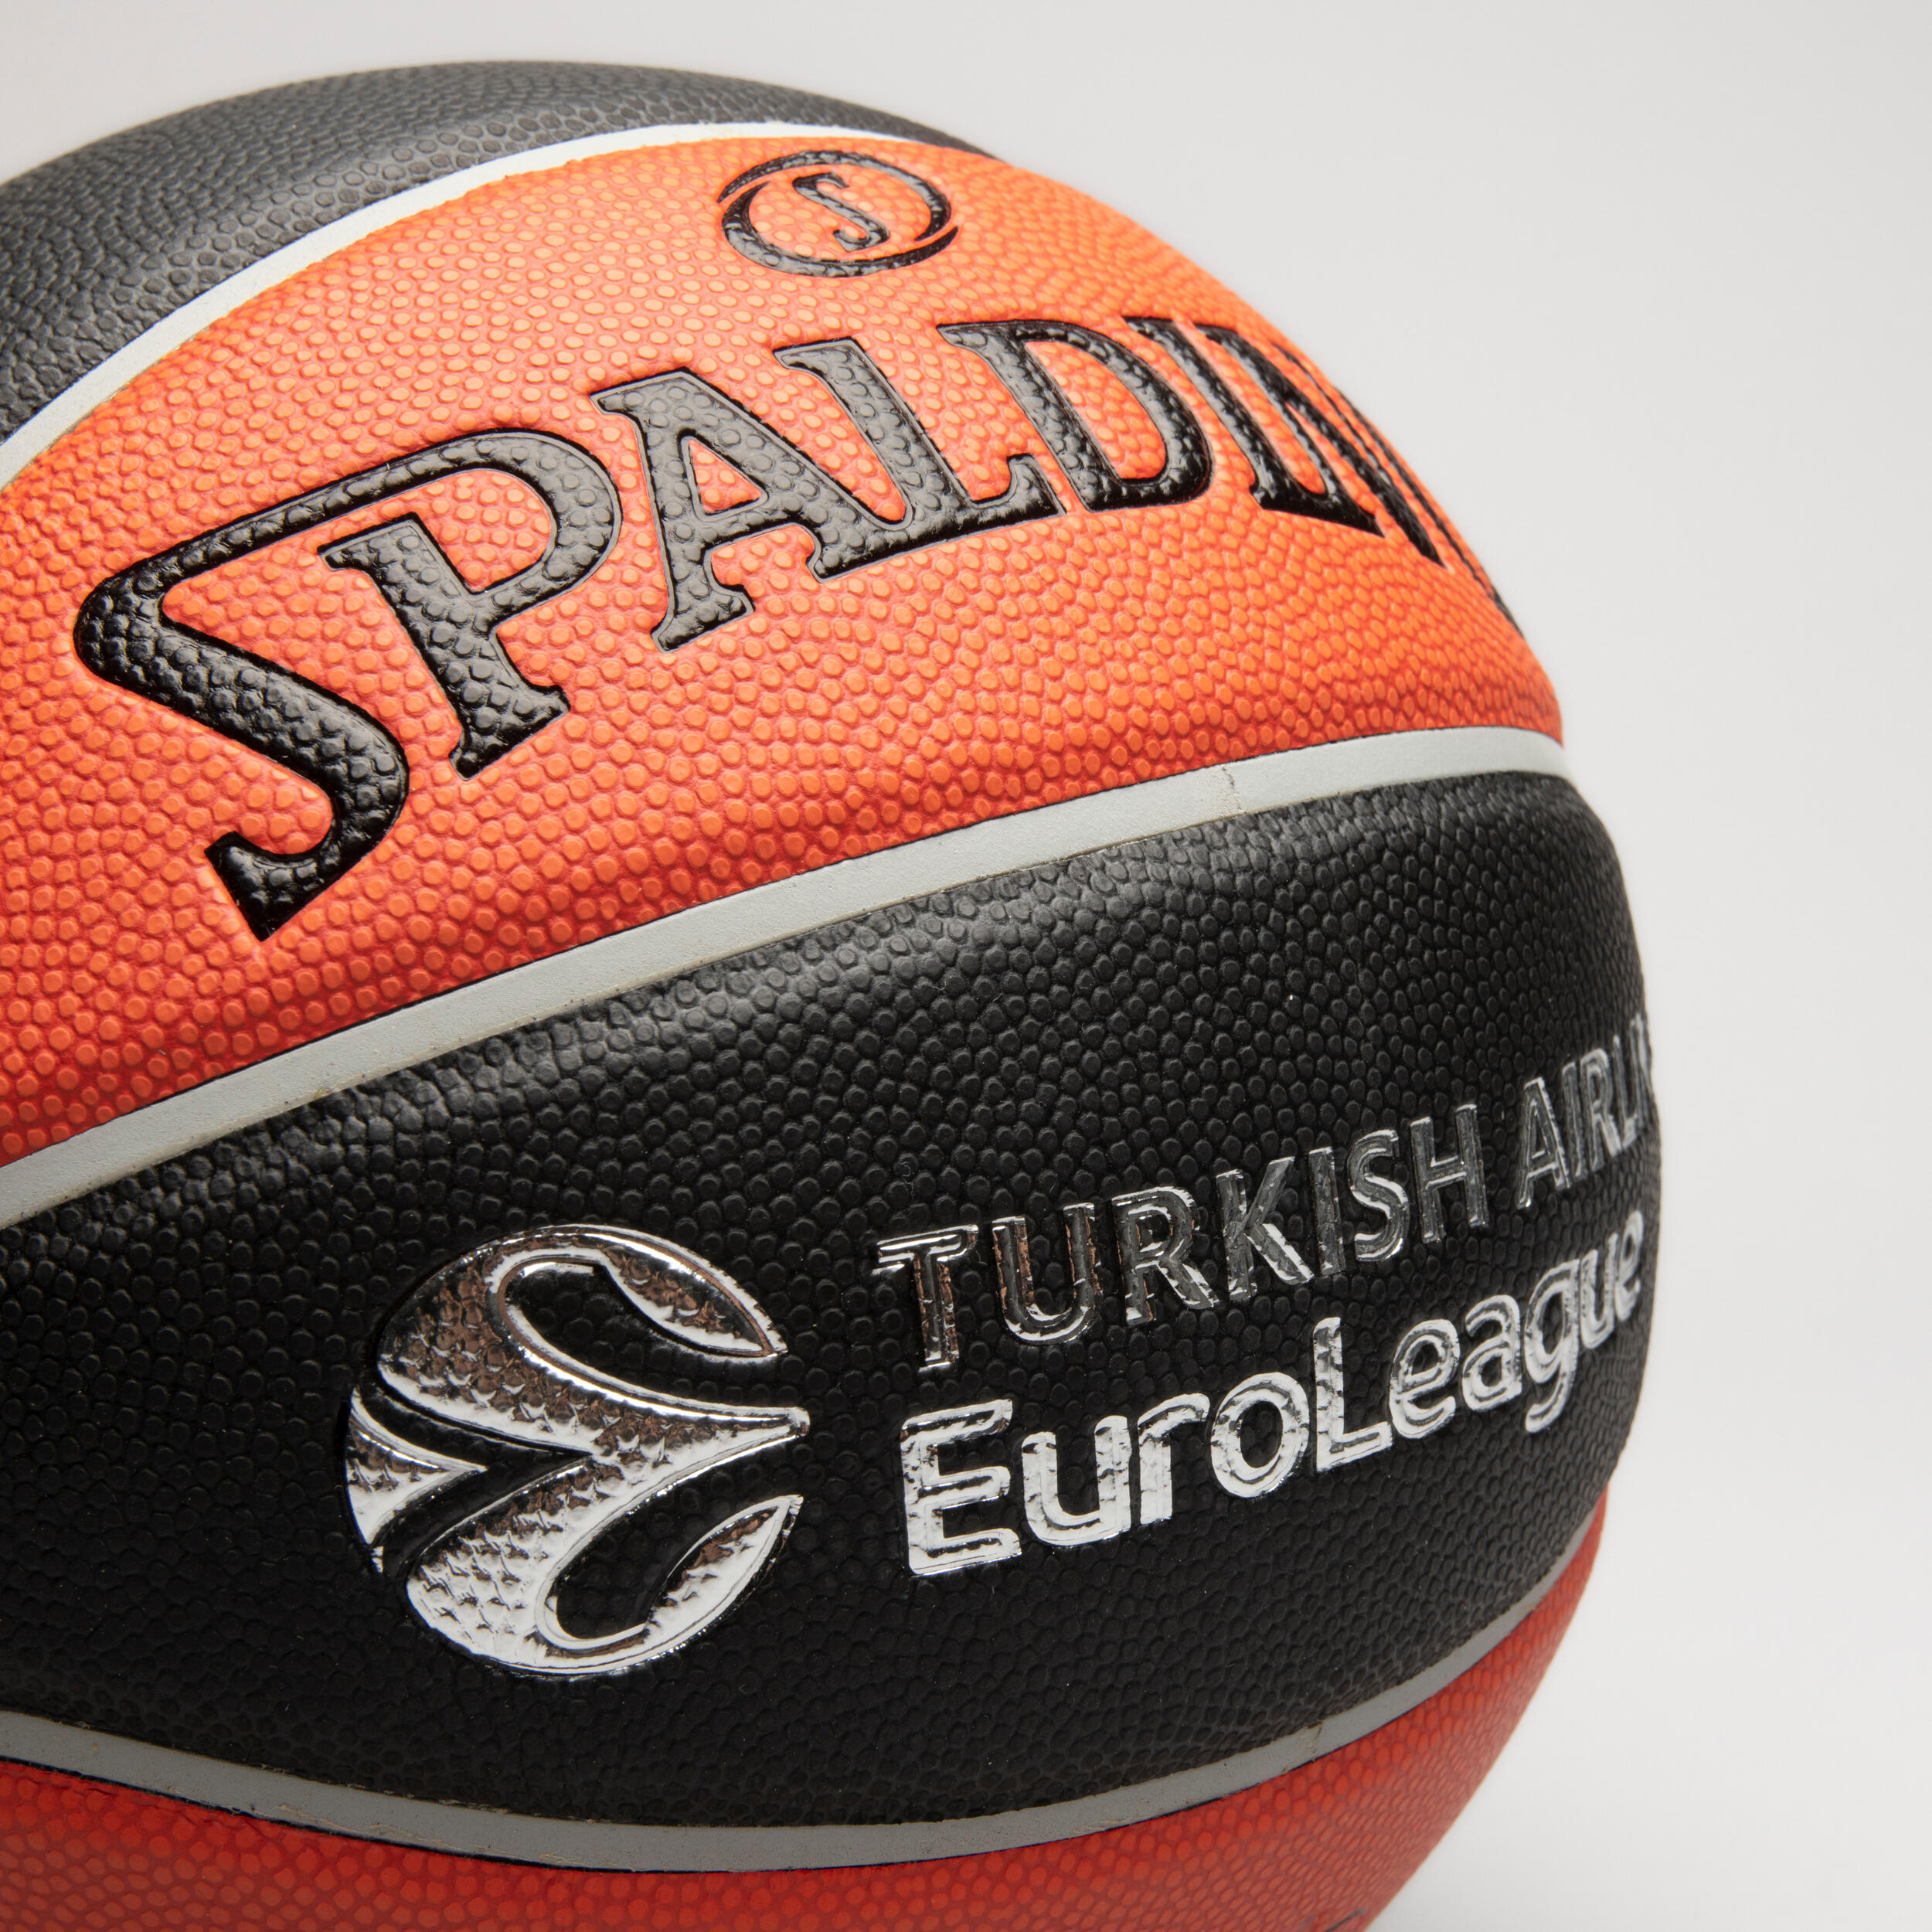 Size 7 Basketball 7 TF1000 Euroleague - Orange/Black 5/8